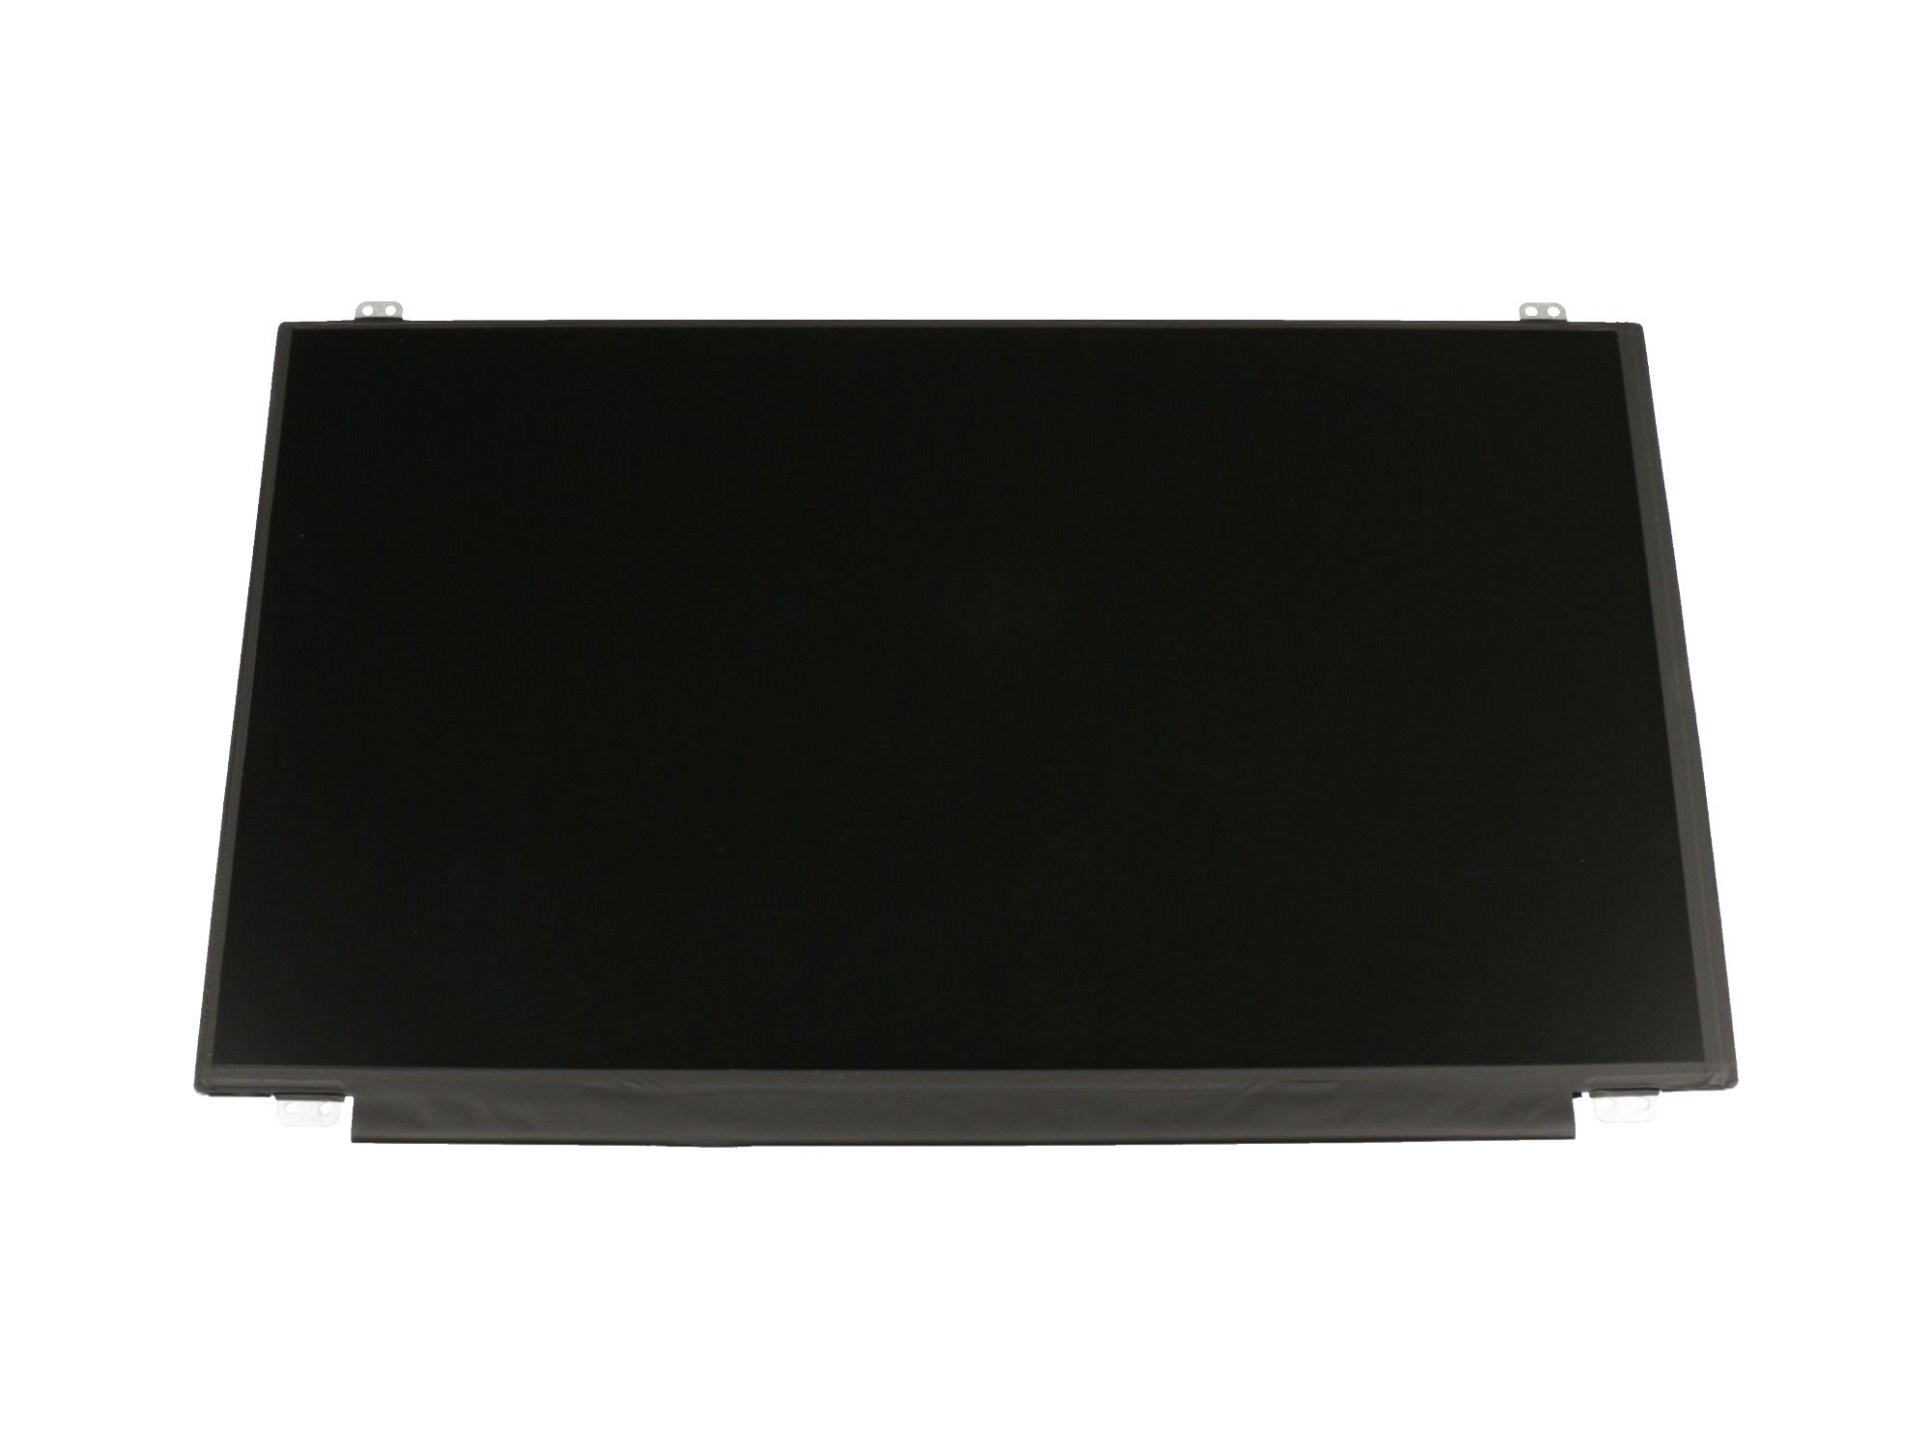 LG LP156WH3-TPS2 Display (1366x768) matt slimline